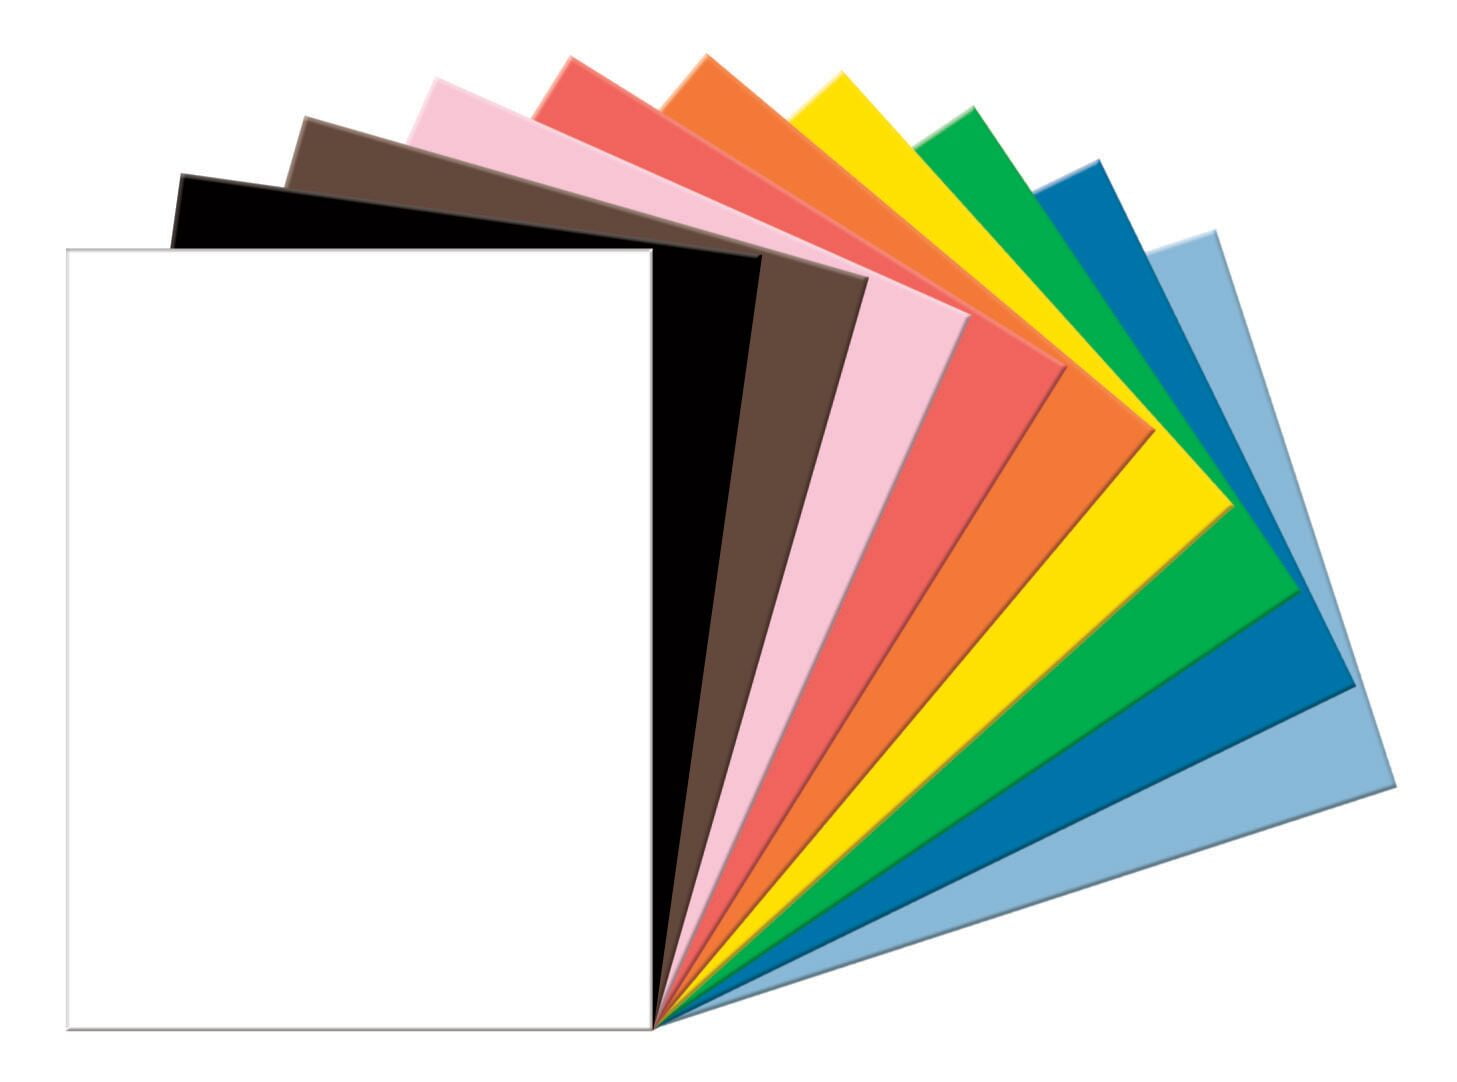 Tru Ray Sulphite Construction Paper 18 x 24 Inches Purple 50 Sheets